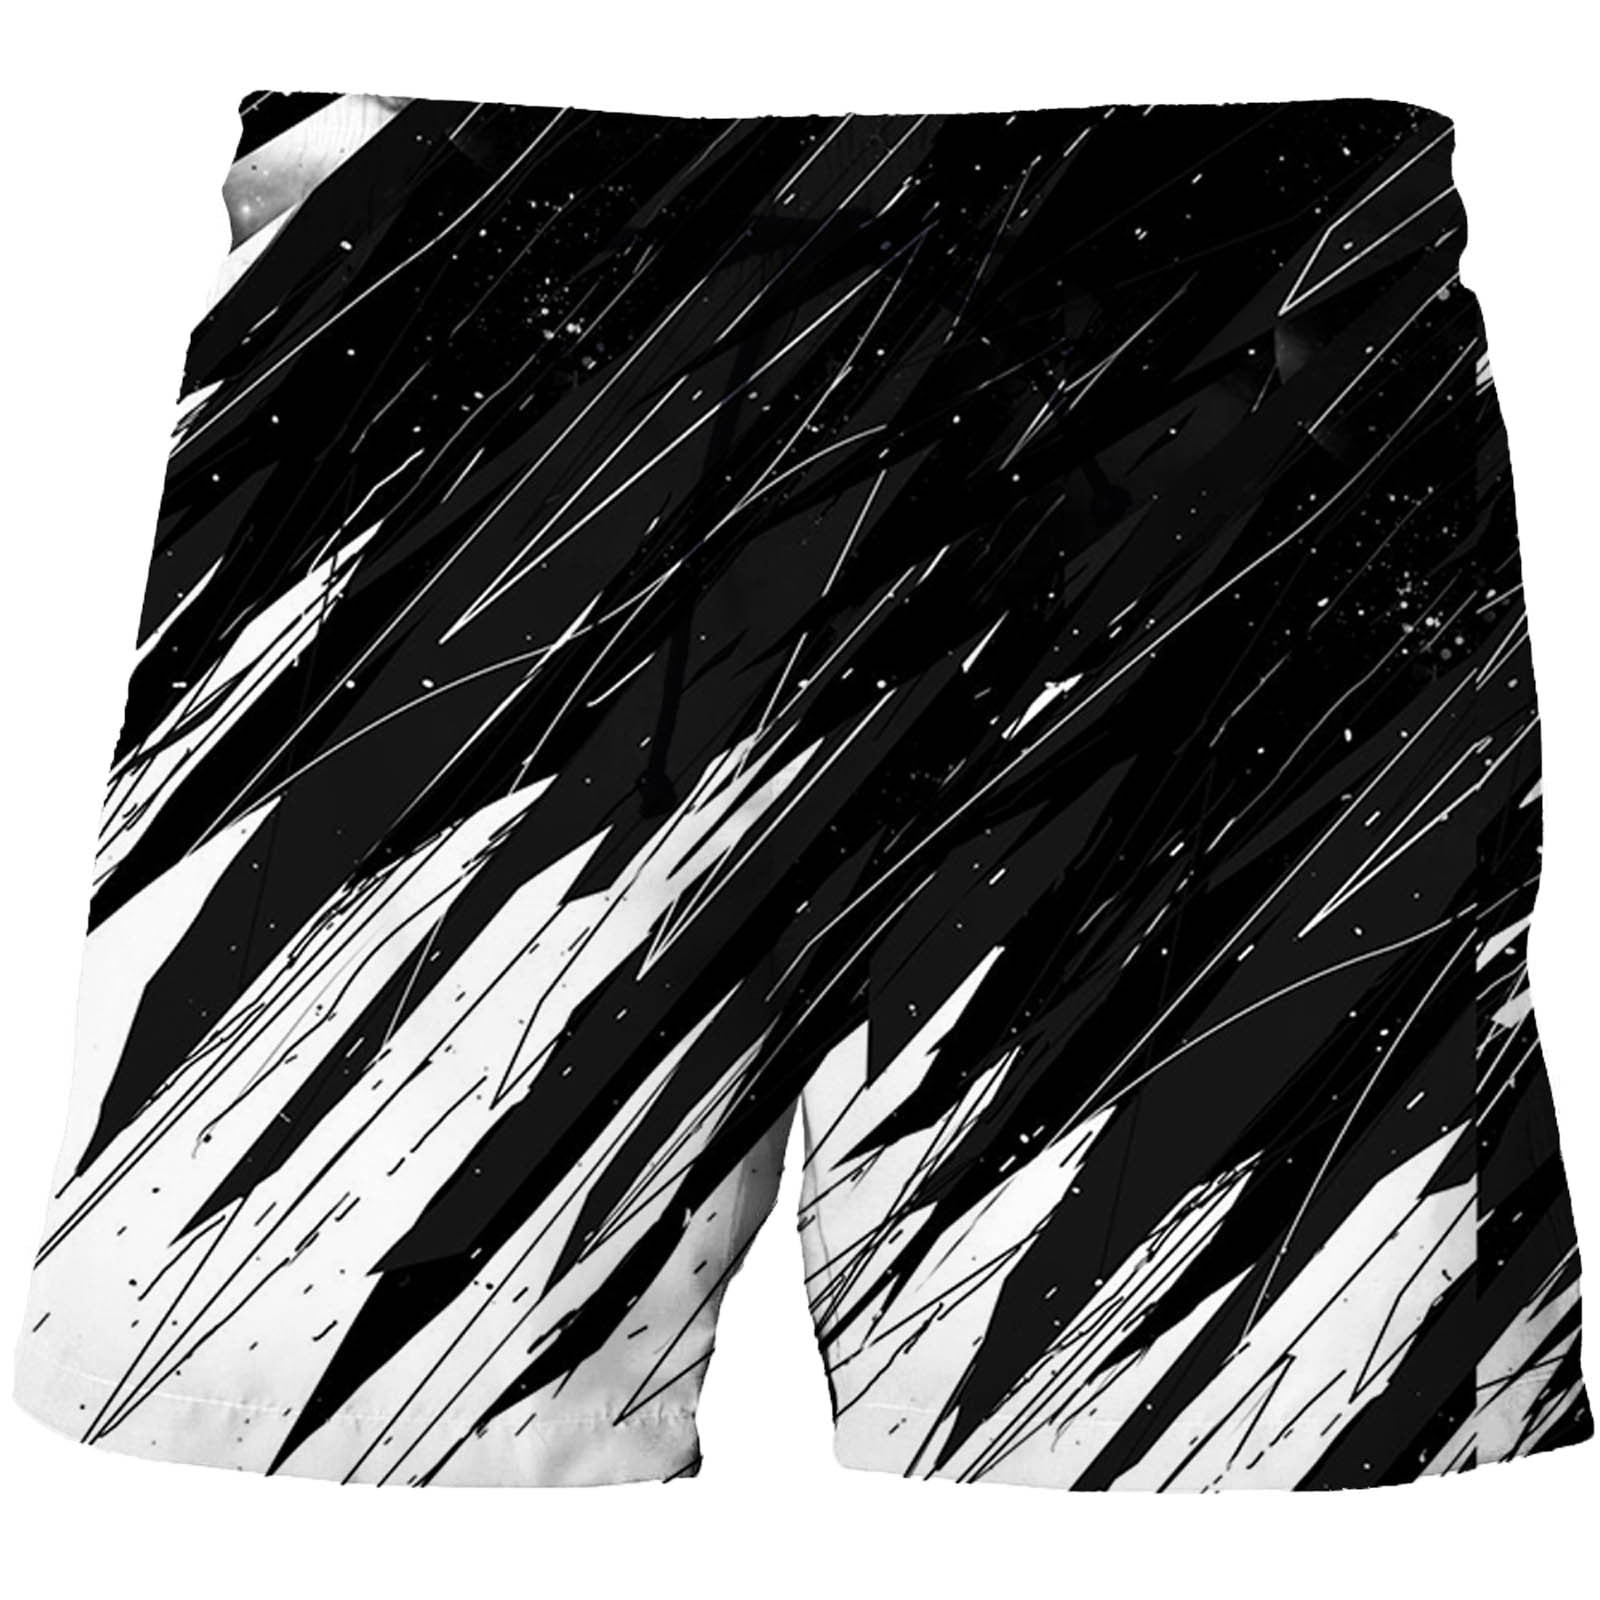 Njoeus Men's Swim Trunks Mens Printed Board Shorts Swimsuit Casual ...